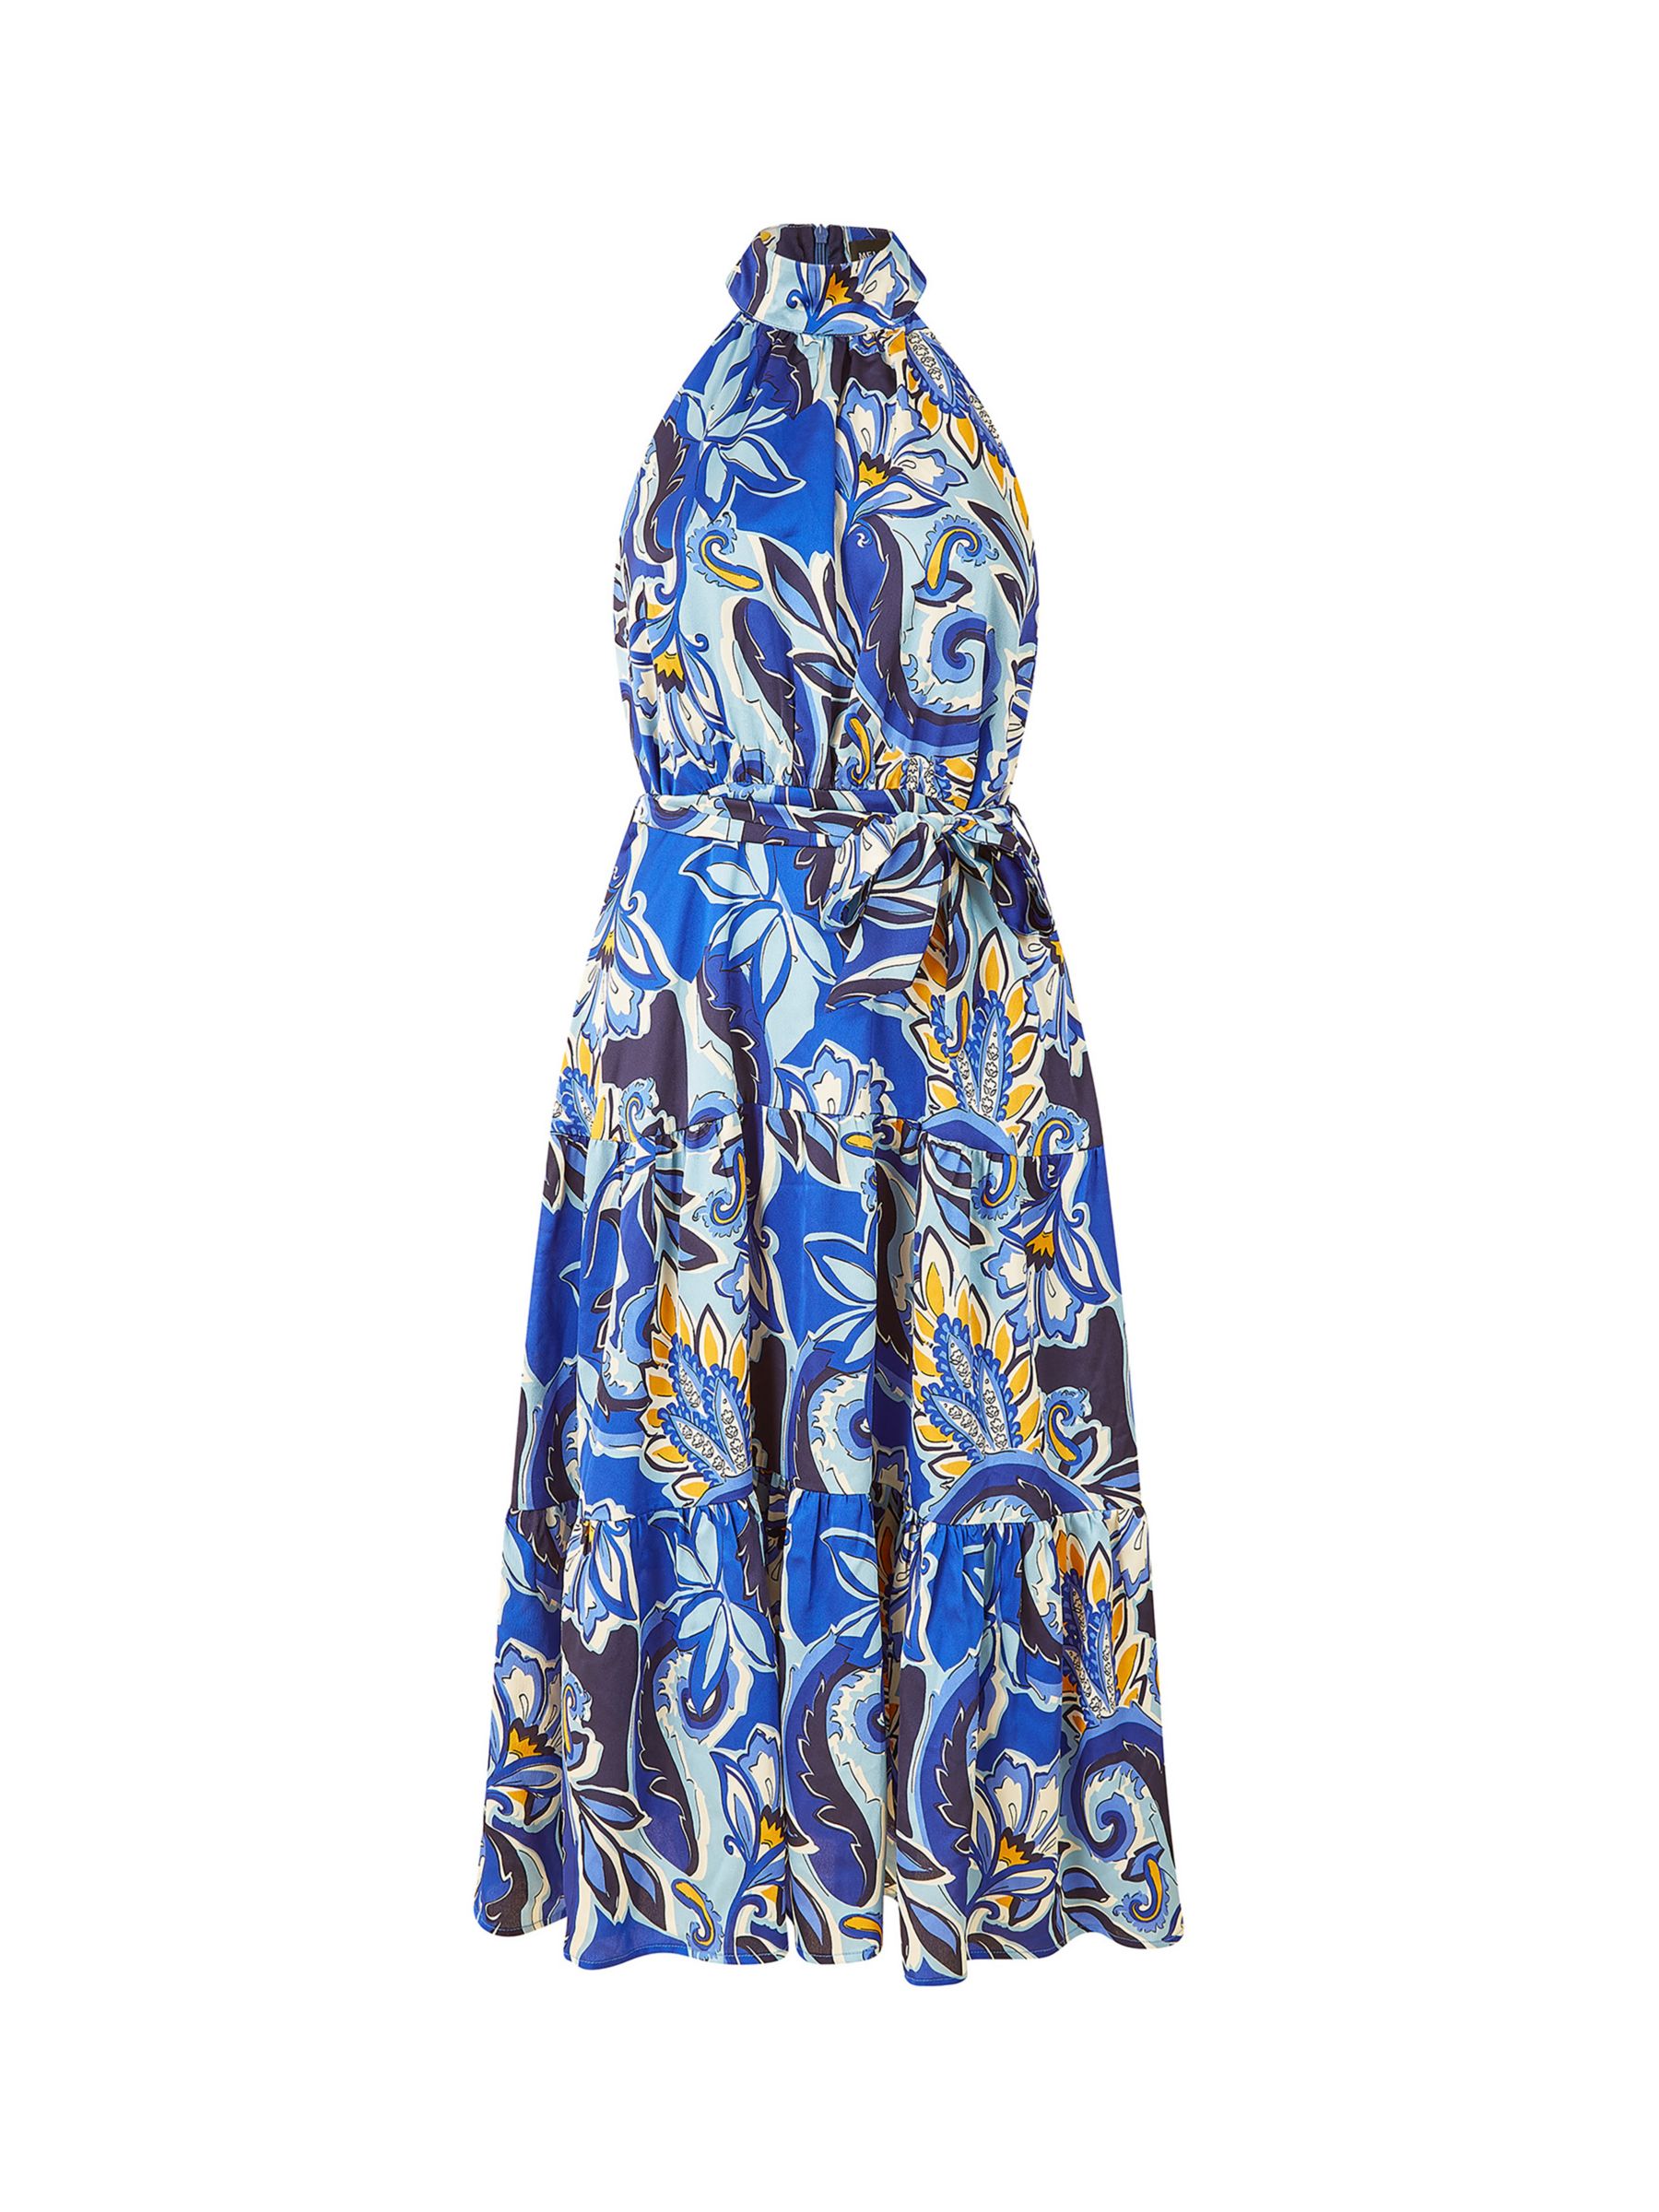 Yumi Mela London Paisley Floral Halter Neck Midi Dress, Blue, 8